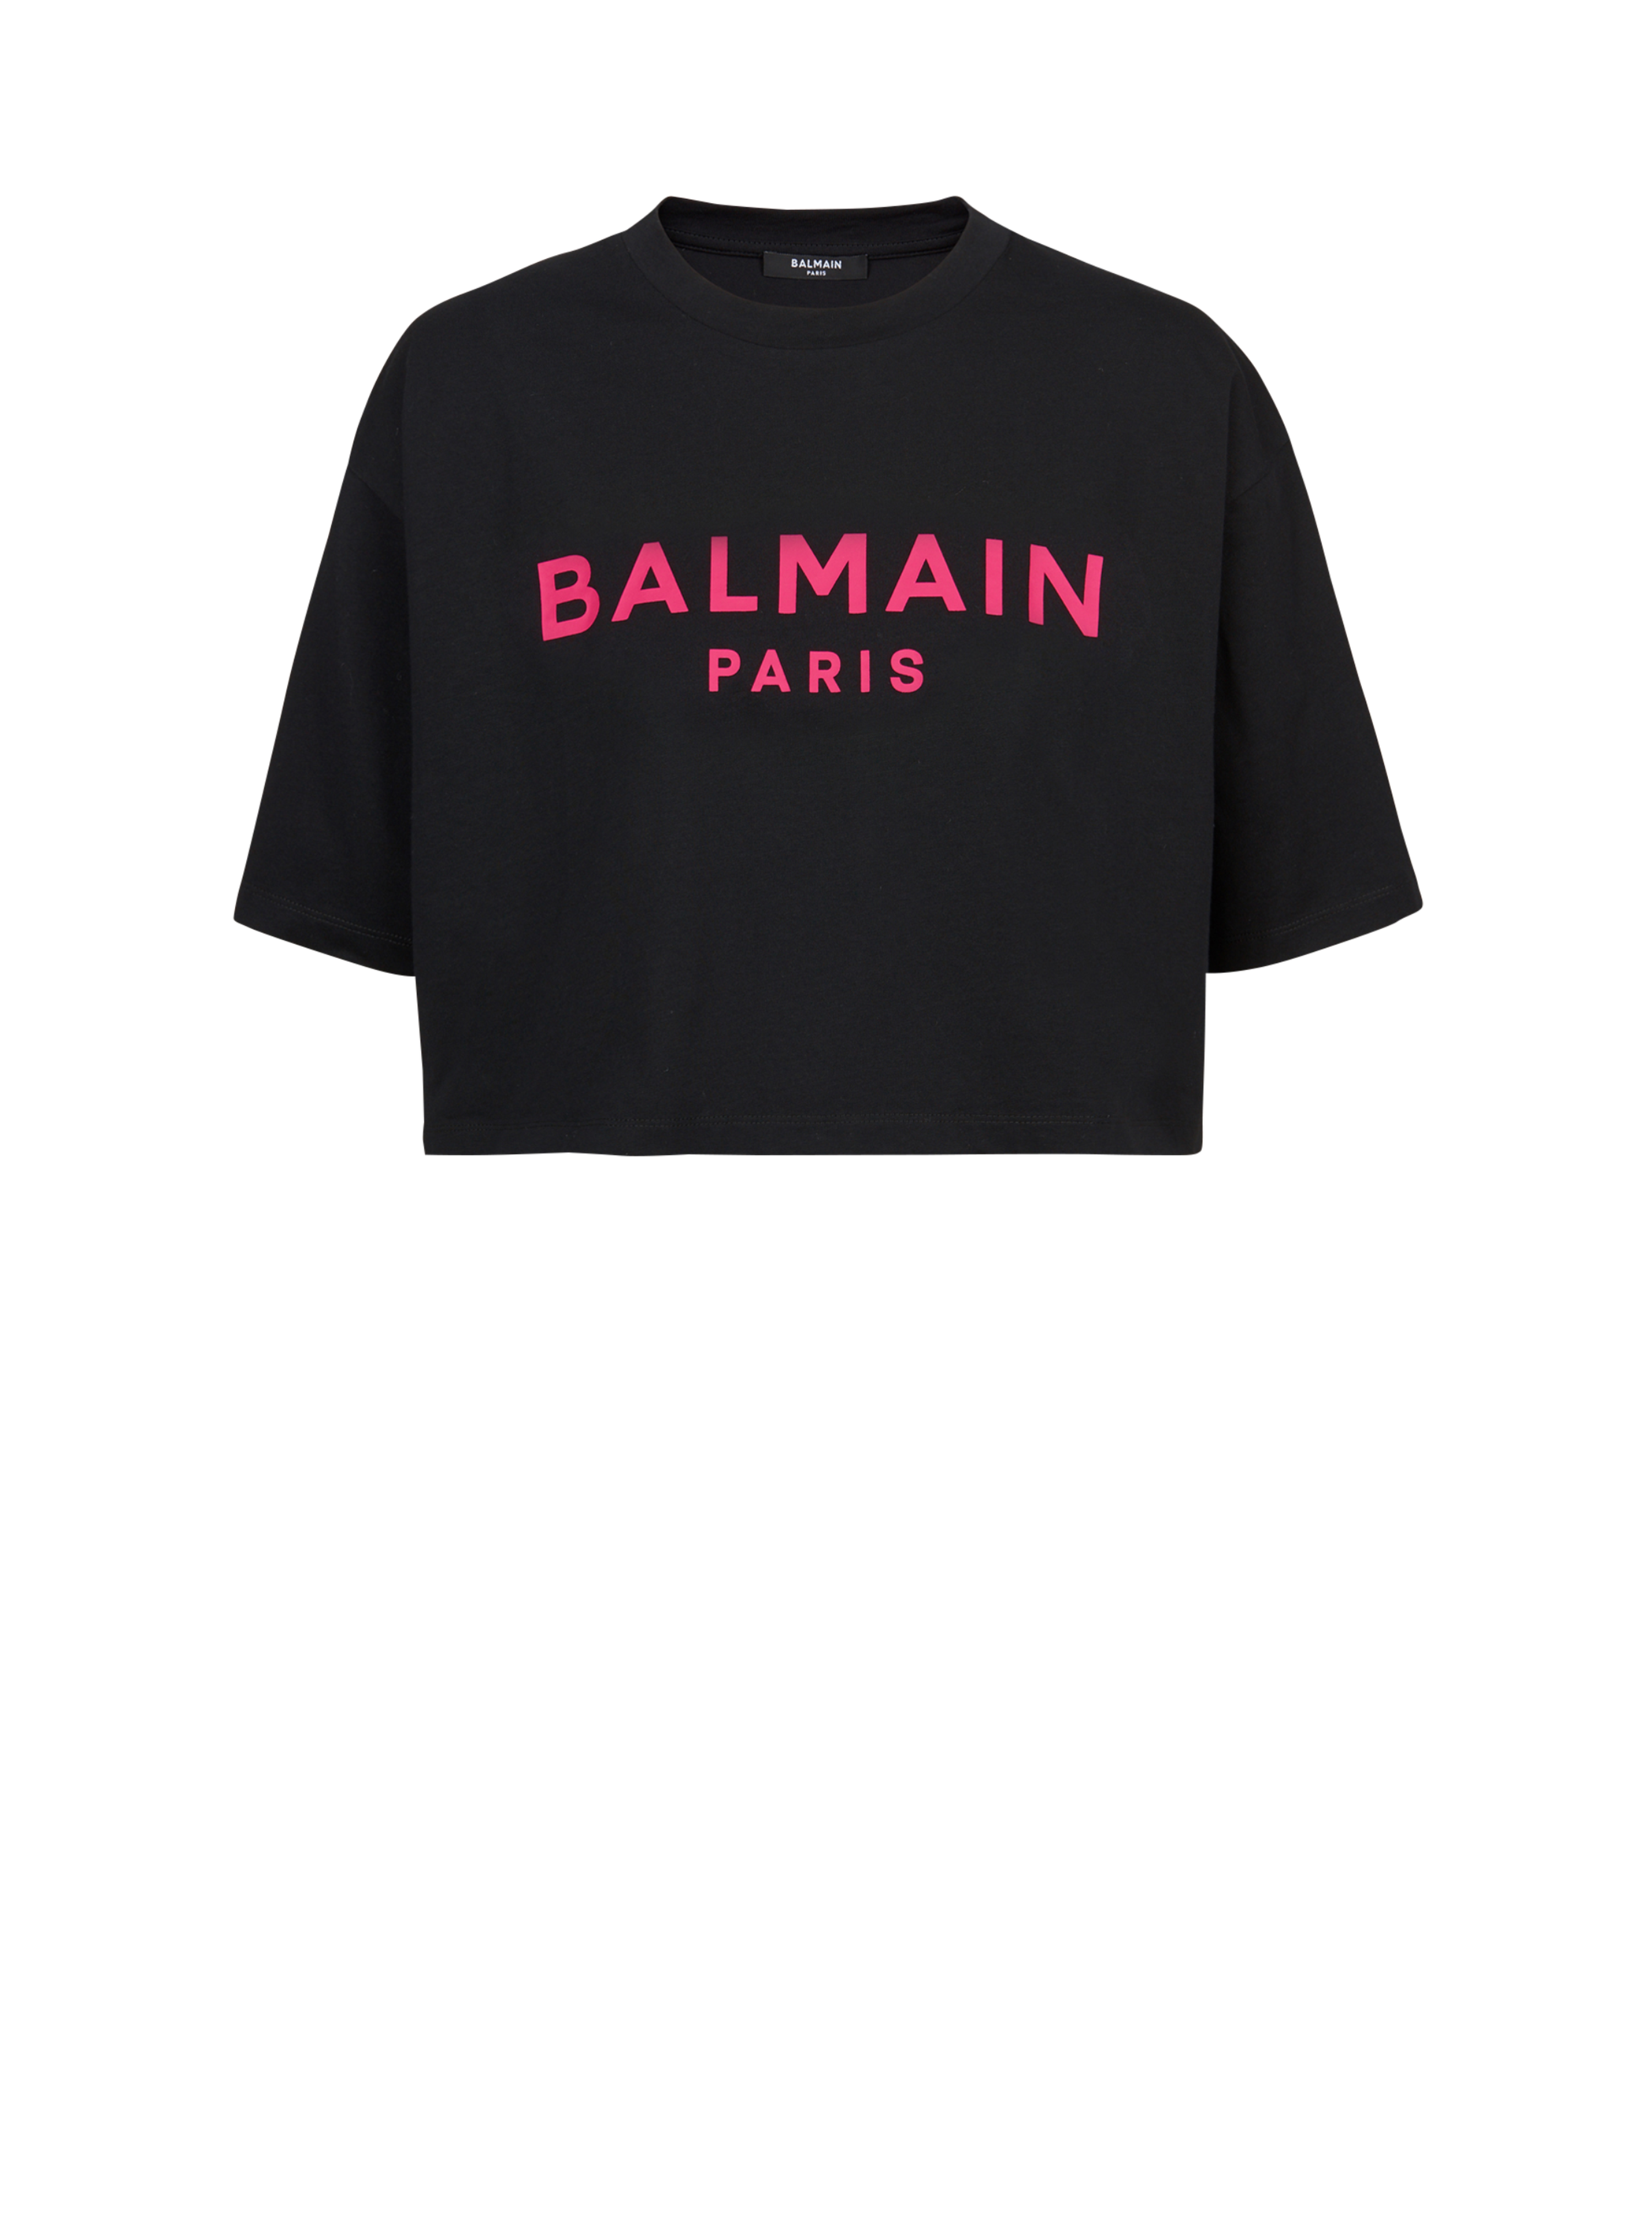 Cropped cotton T-shirt with Balmain logo print, pink